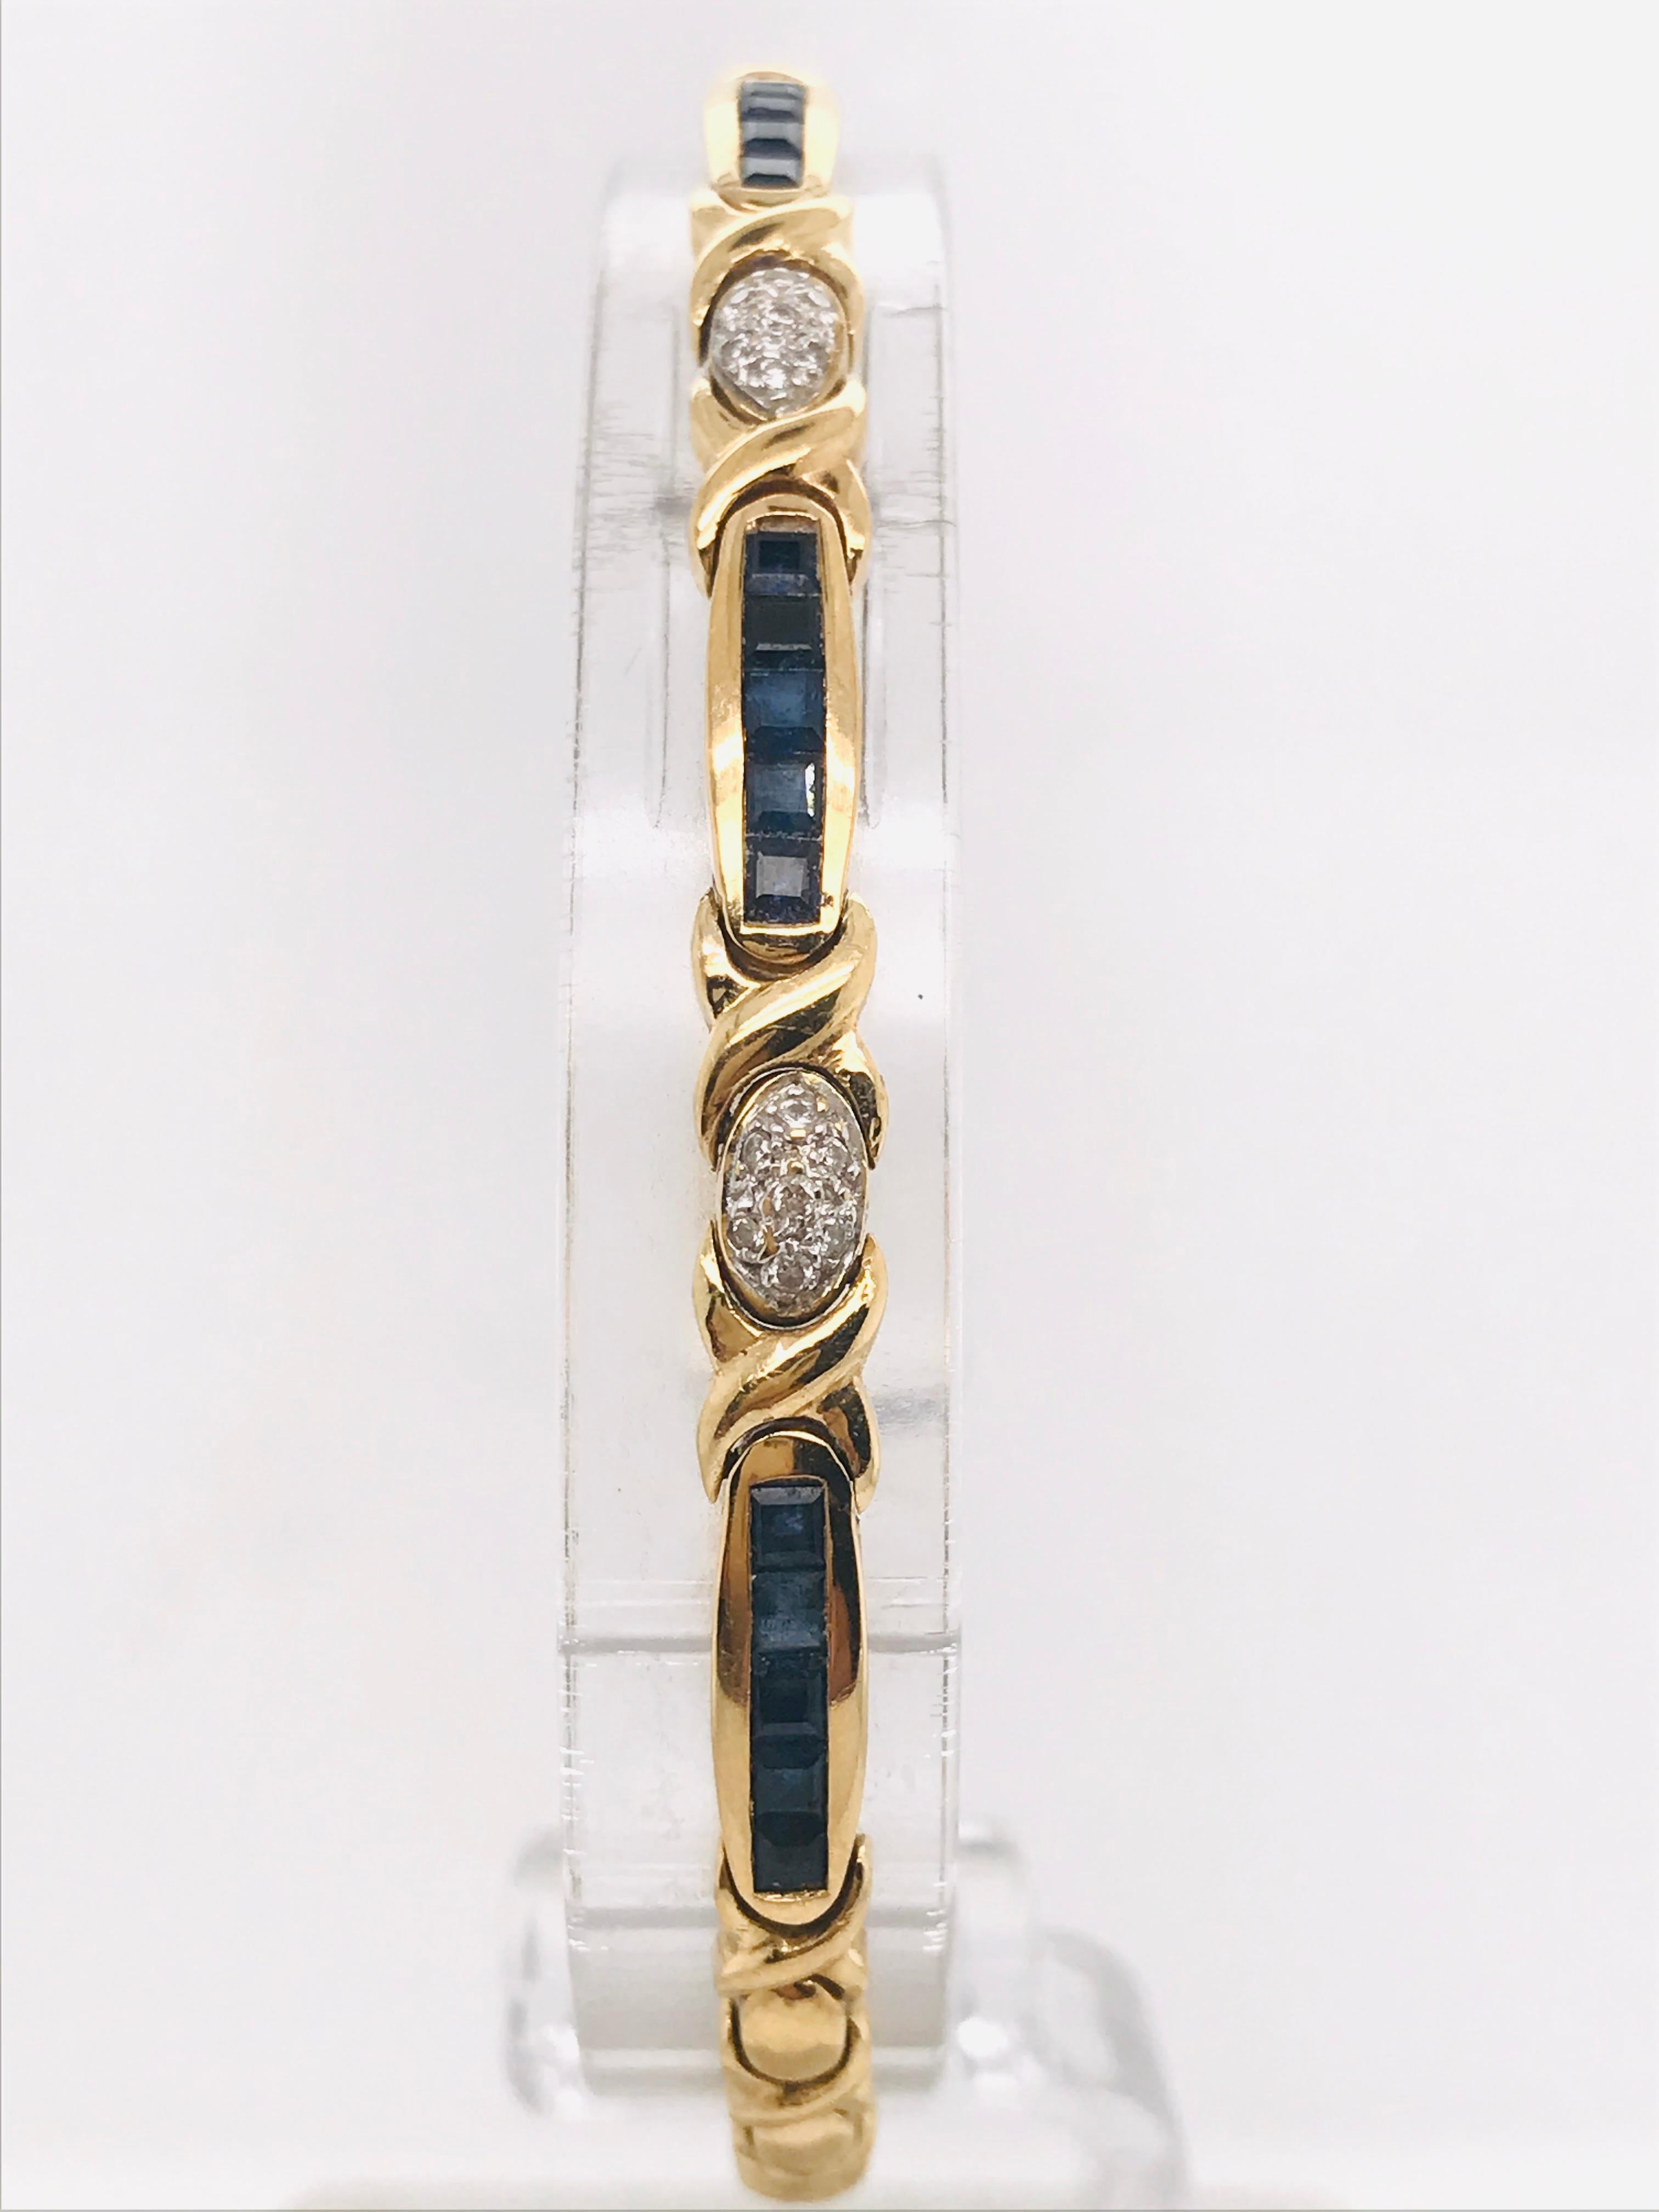 Yellow Gold 18 Carats Bracelet With Saphirres and Diamonds 
Good quality antique bracelet
